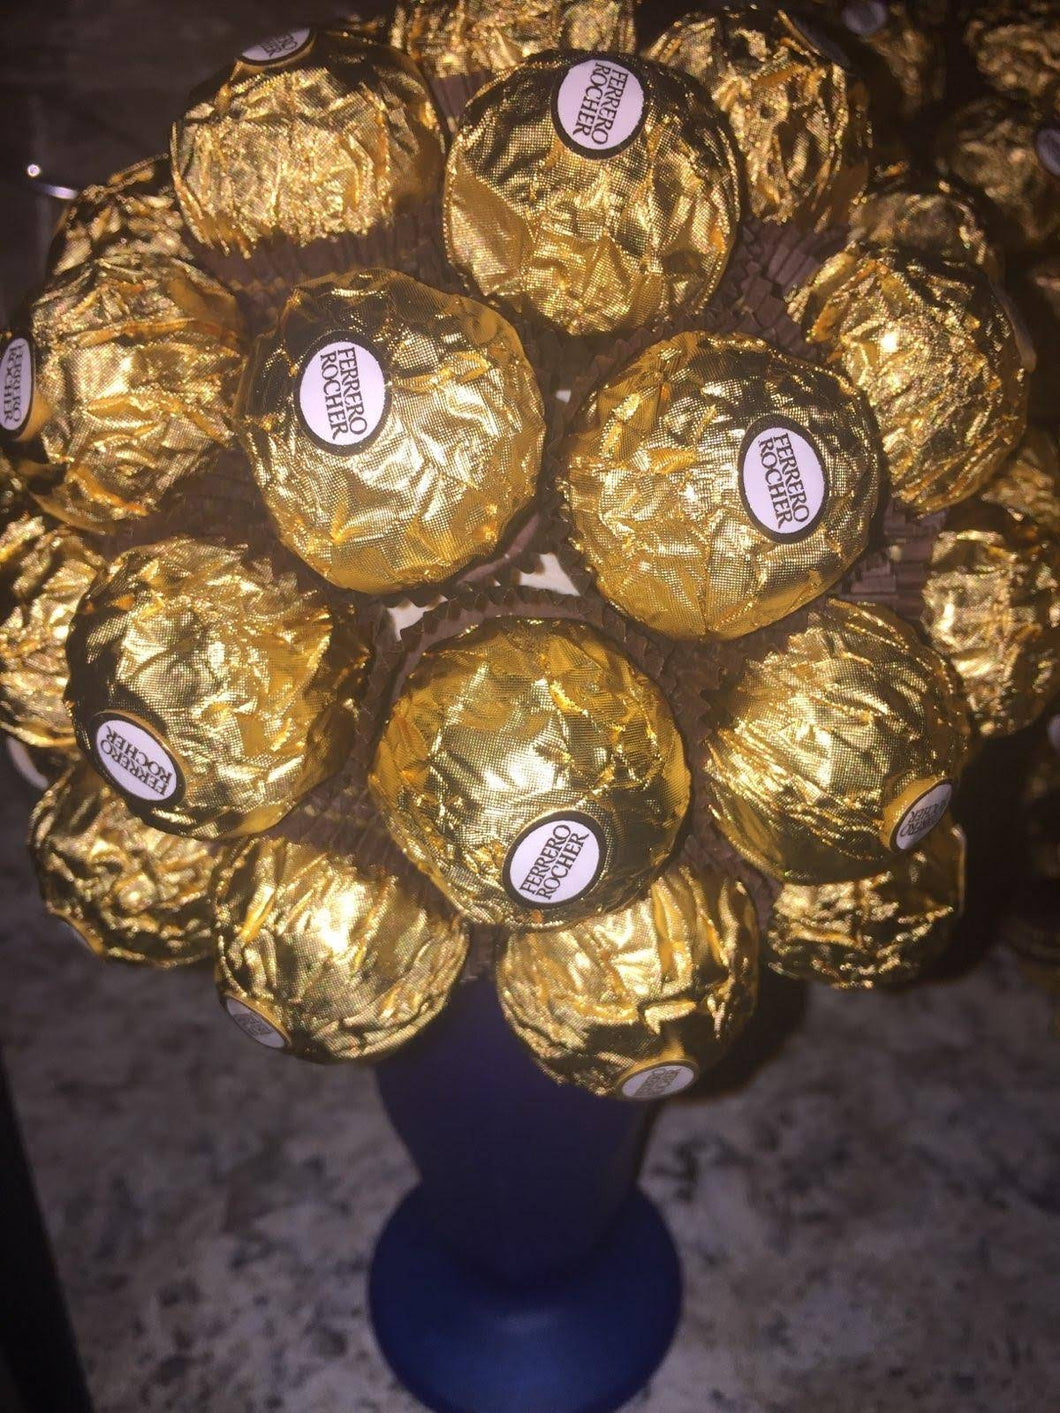 Candy Bouquet - Ferrero Rocher Chocolates